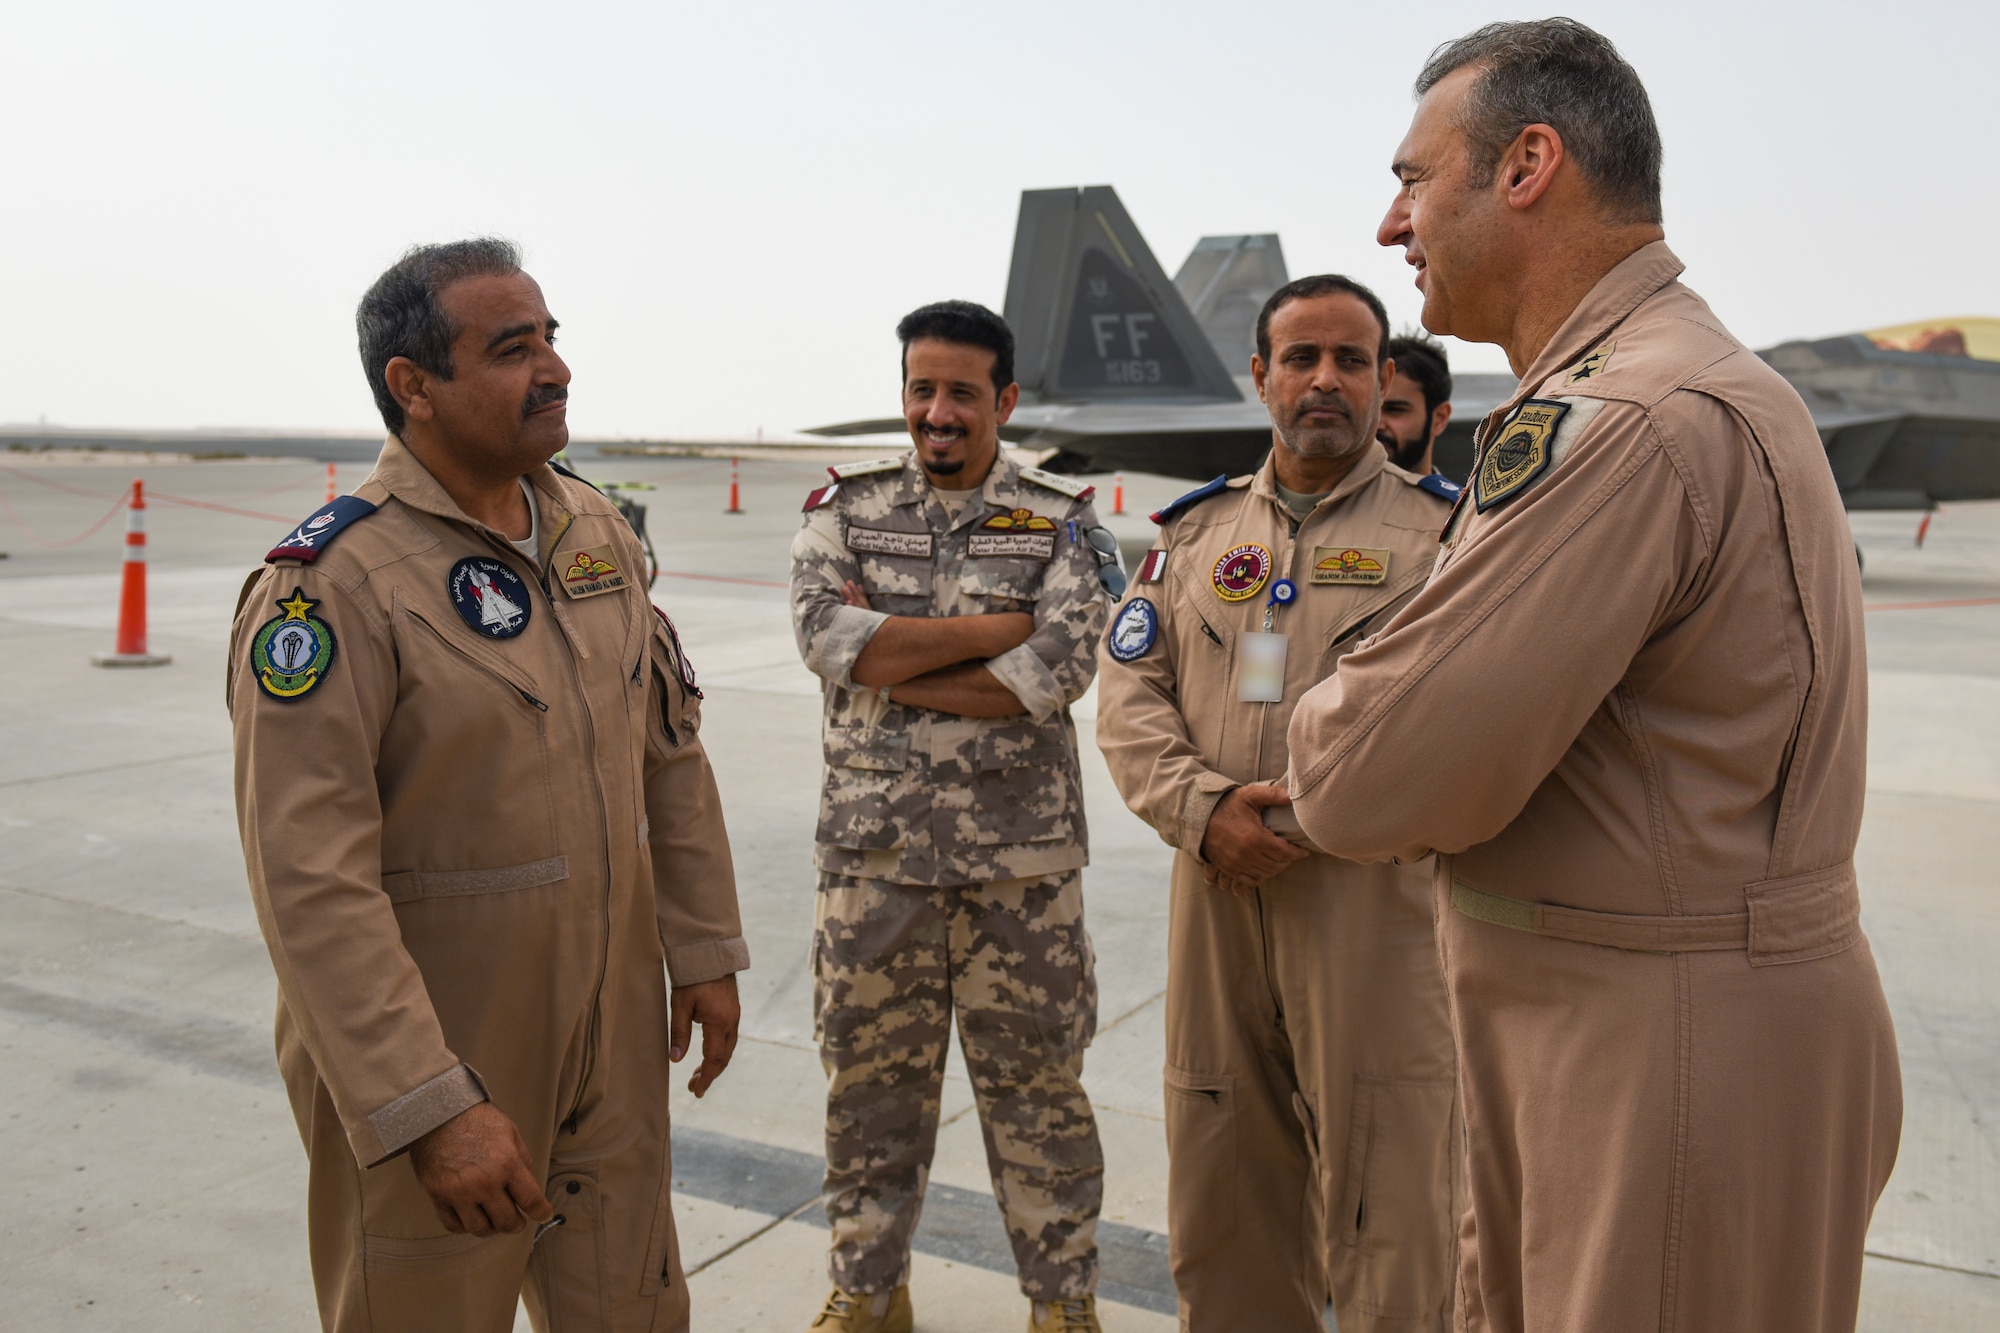 The Commander of the Qatar Emiri Air Force, Staff MG Pilot Salem Bin Hamad Al-Nabet, and other senior leaders, converse with Lt. General Joseph Guastella, U.S. Air Forces Central Command Commander Falcon during a visit to Al Udeid Air Base Qatar, Nov 10, 2019.